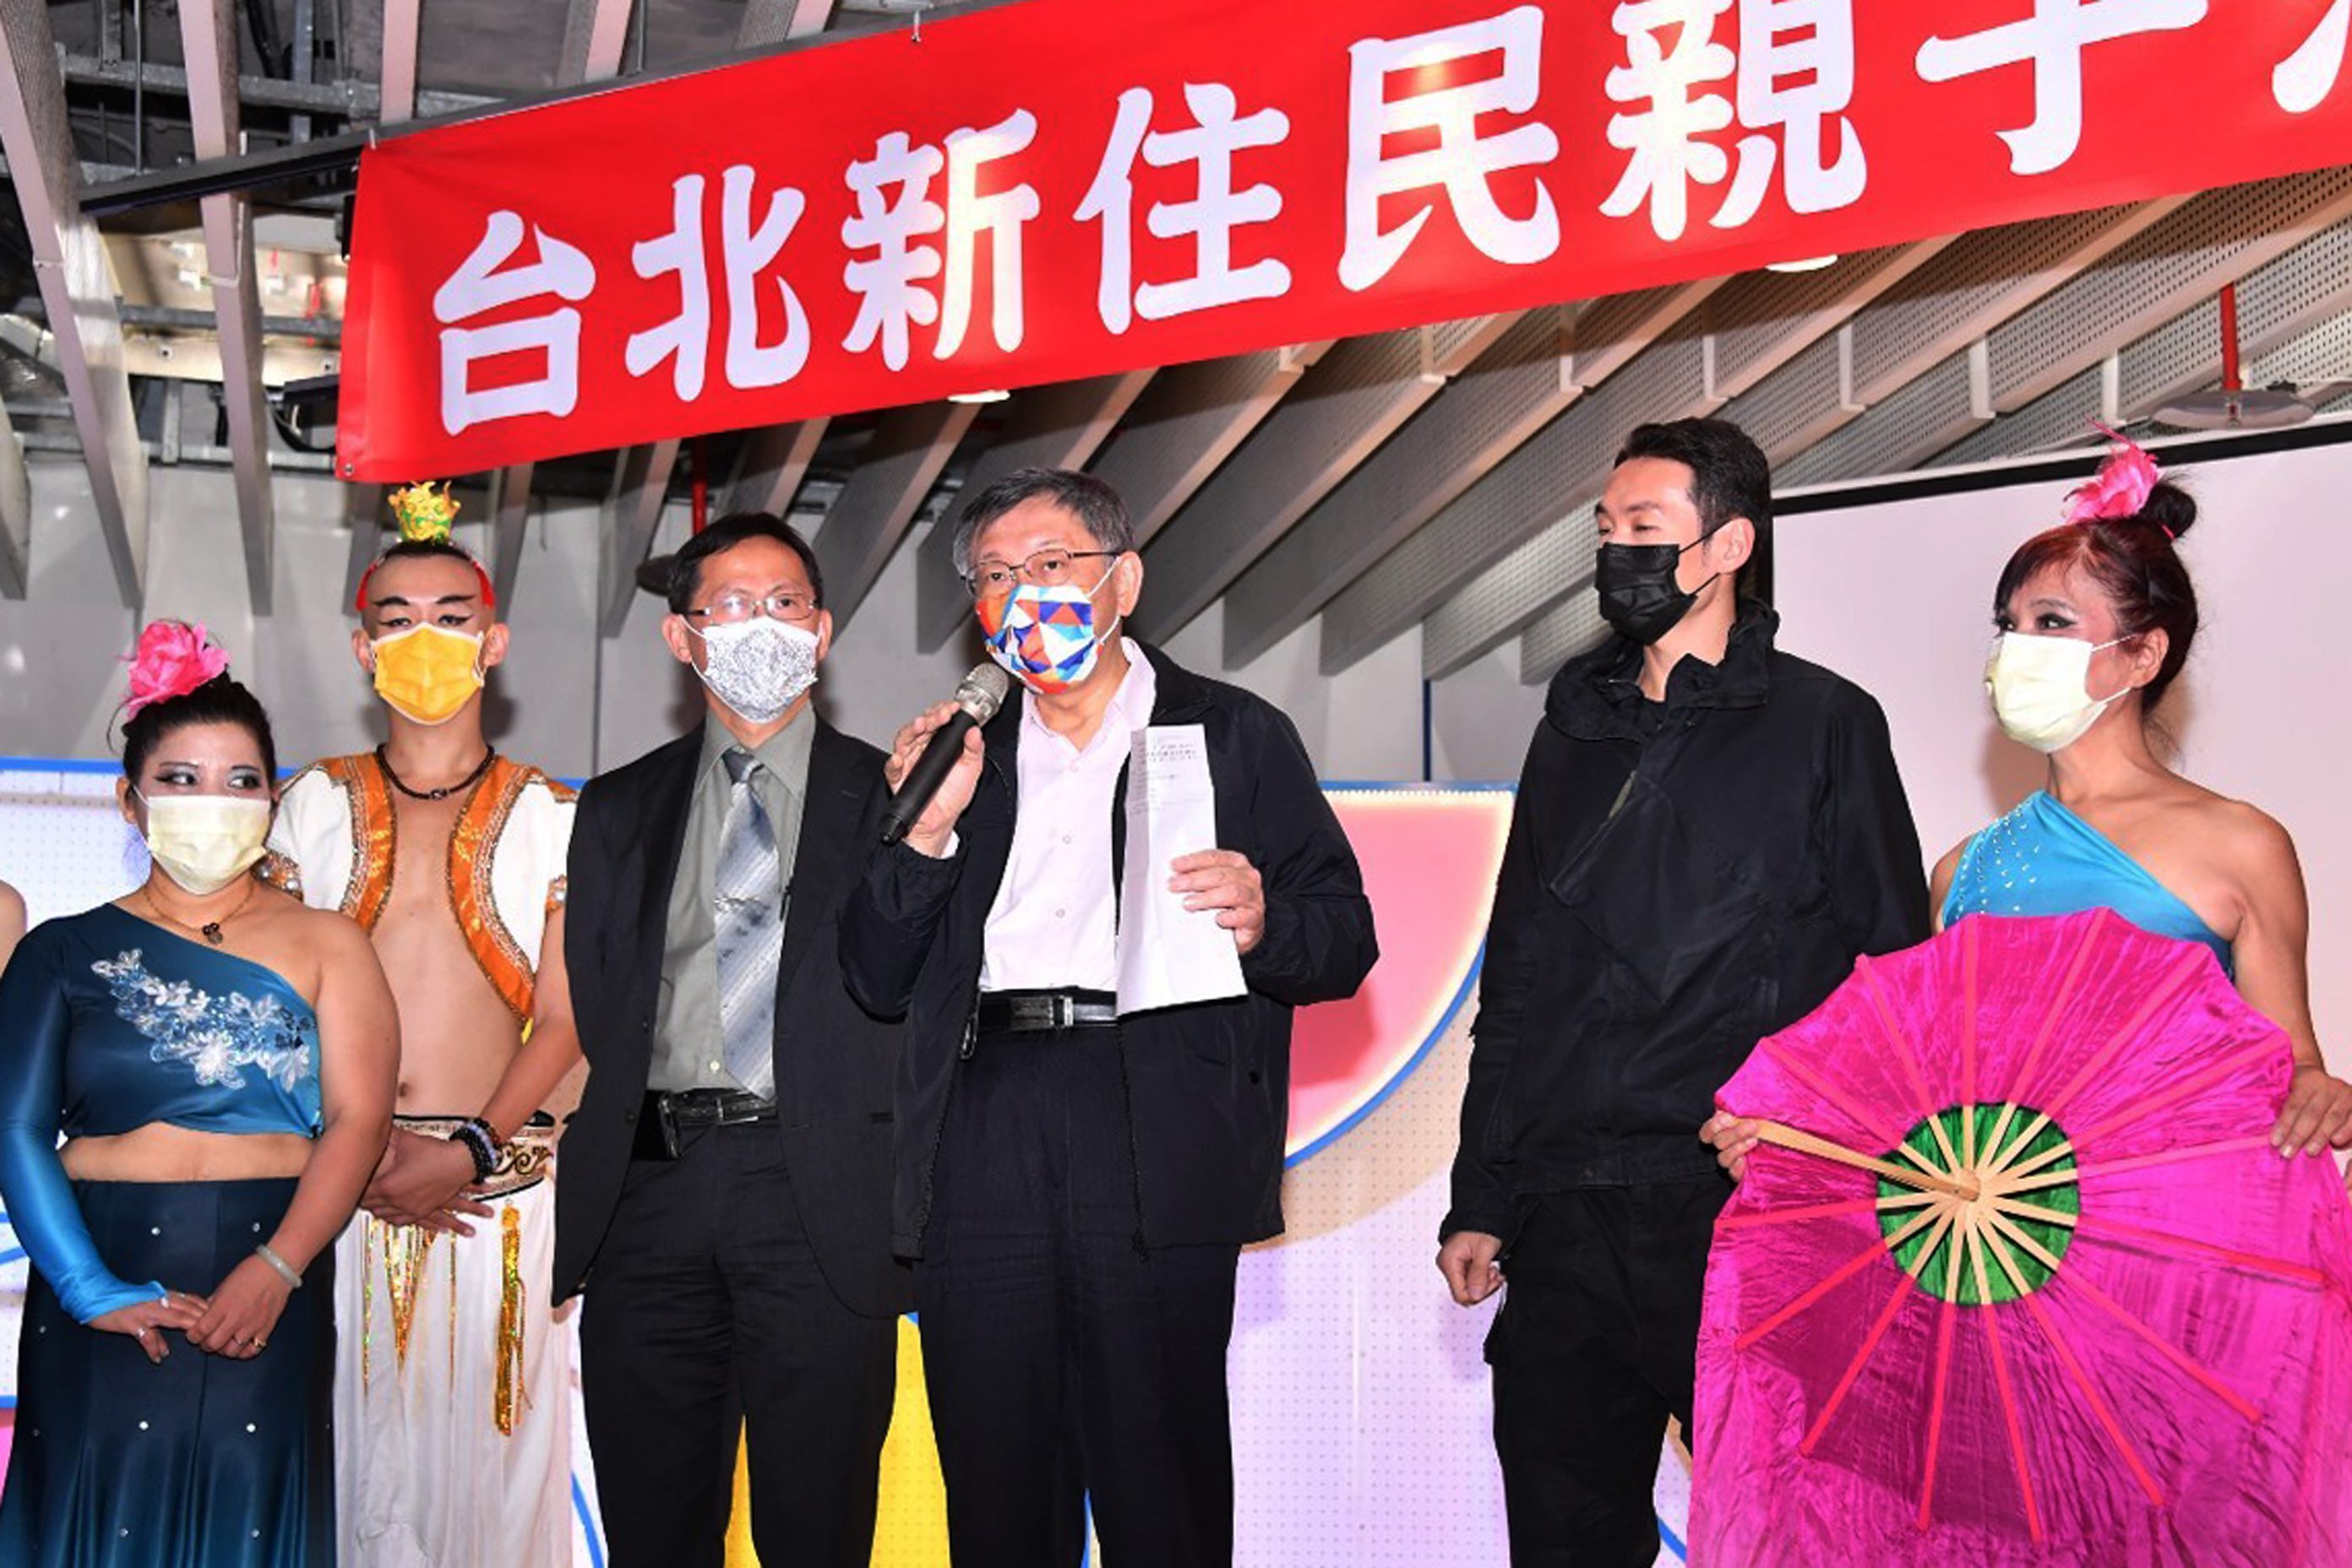 Taipei Mayor Ko Wen-je leads Taipei City to build a multicultural society. (Photo / Provided by Taipei City Government)